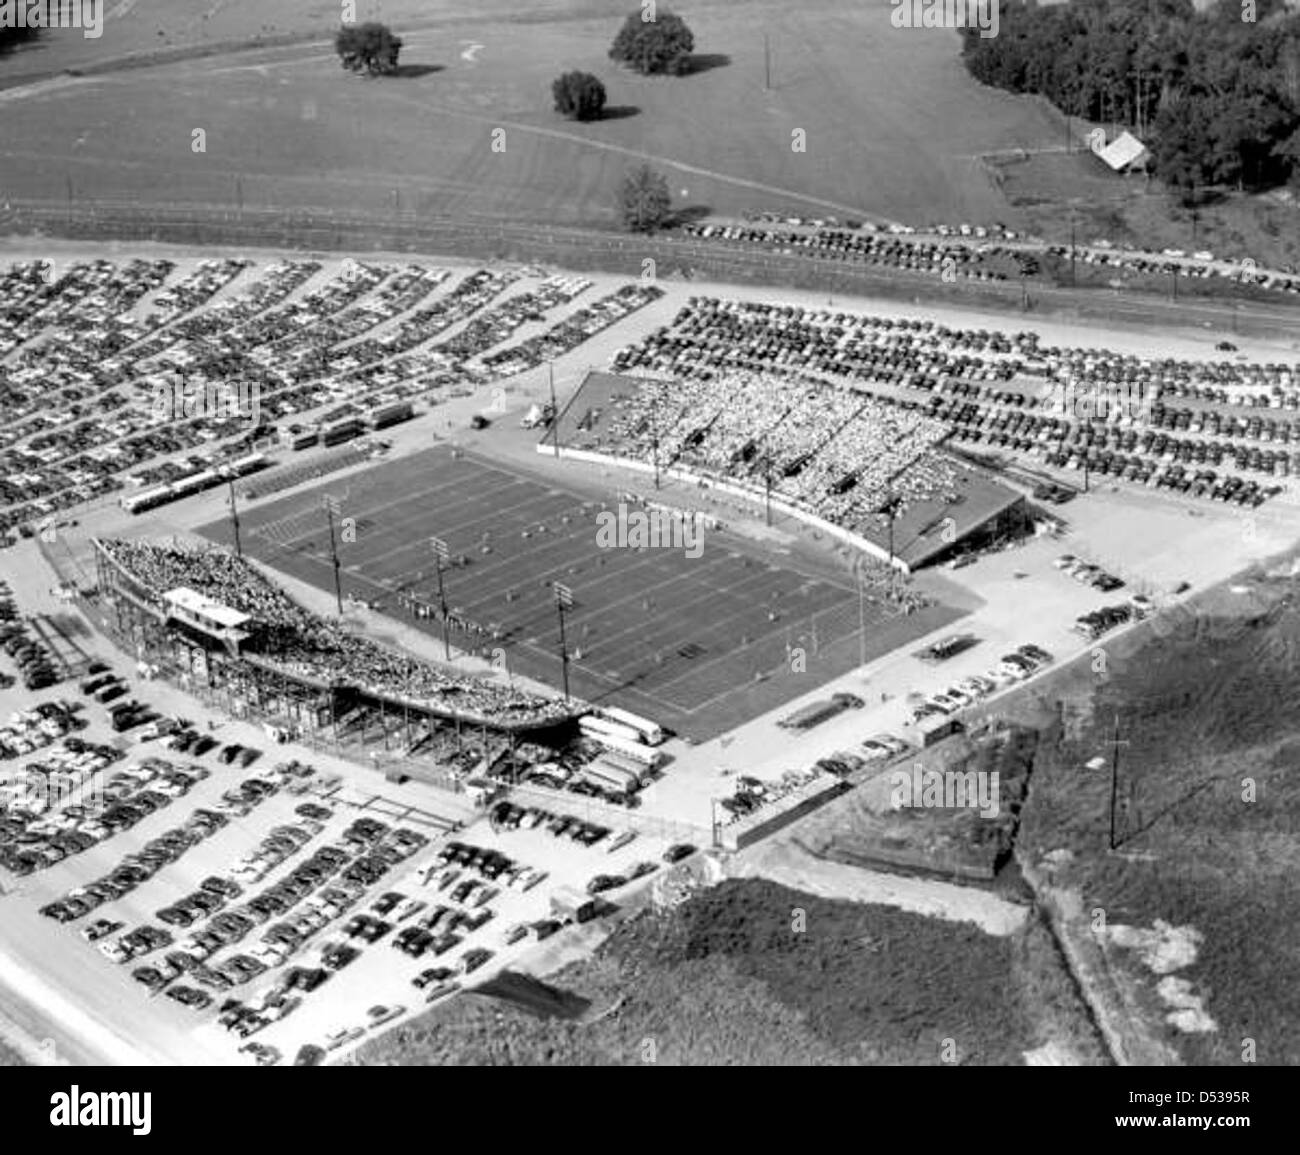 Dedication game at Doak Campbell Stadium: Tallahassee, Florida Stock Photo